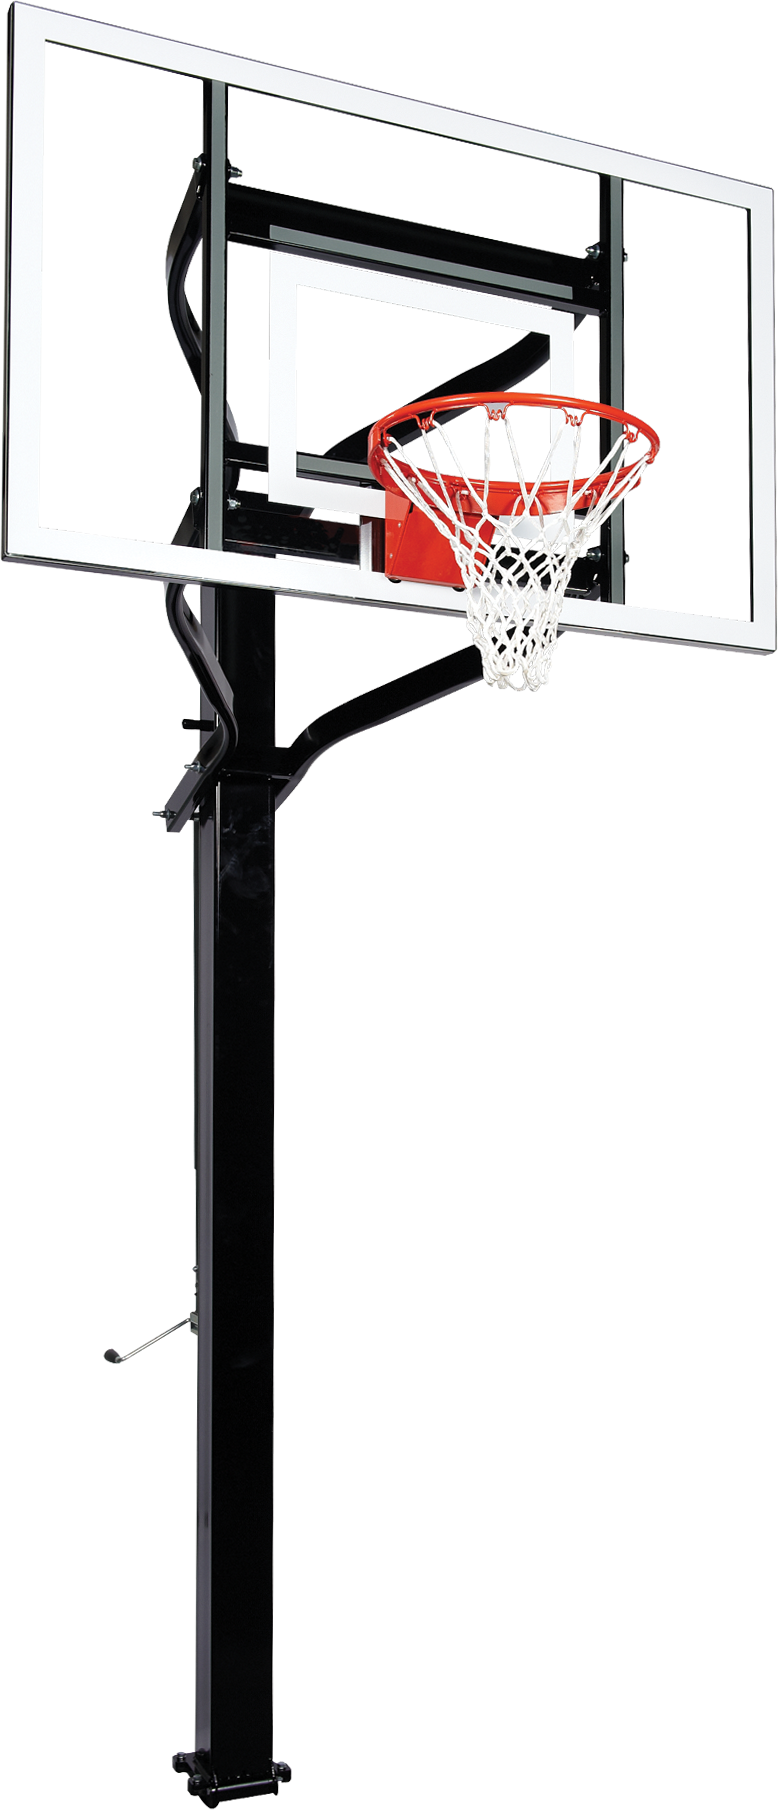 Goalsetter X660 - Glass - Collegiate Breakaway Rim - driveway basketball hoop